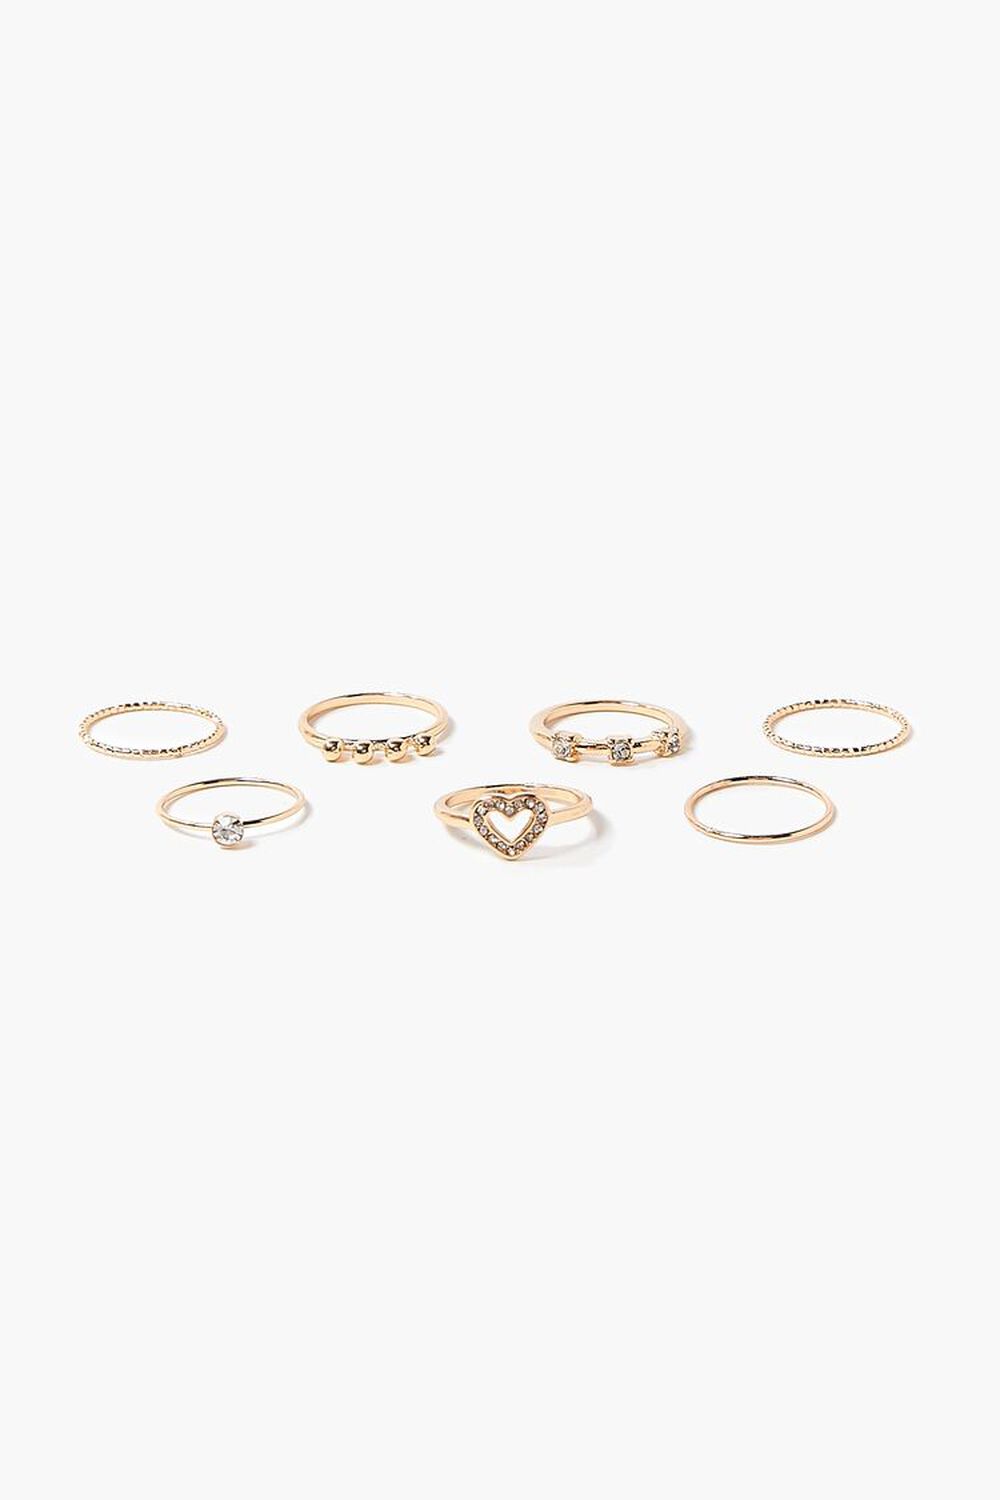 GOLD/CLEAR Upcycled Rhinestone Heart Ring Set, image 1